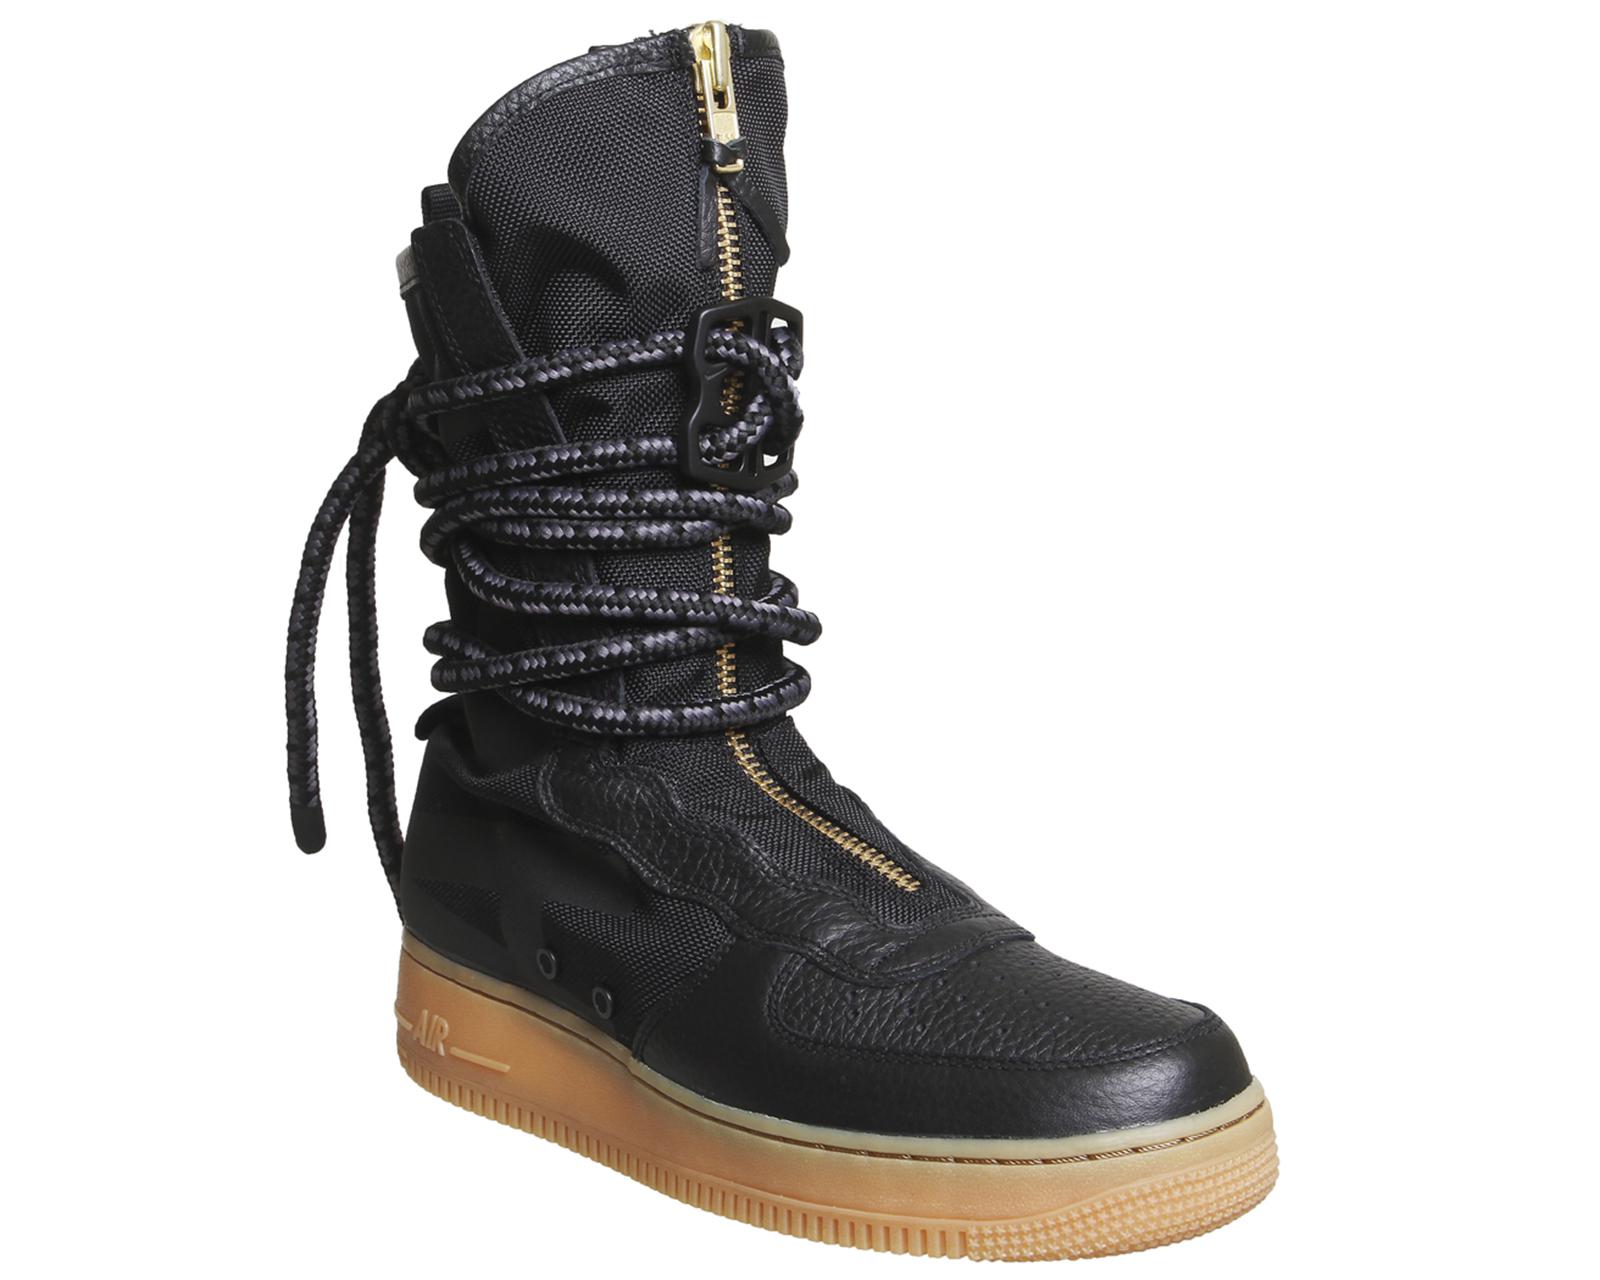 Lyst - Nike Sf Af Hi Boots in Black